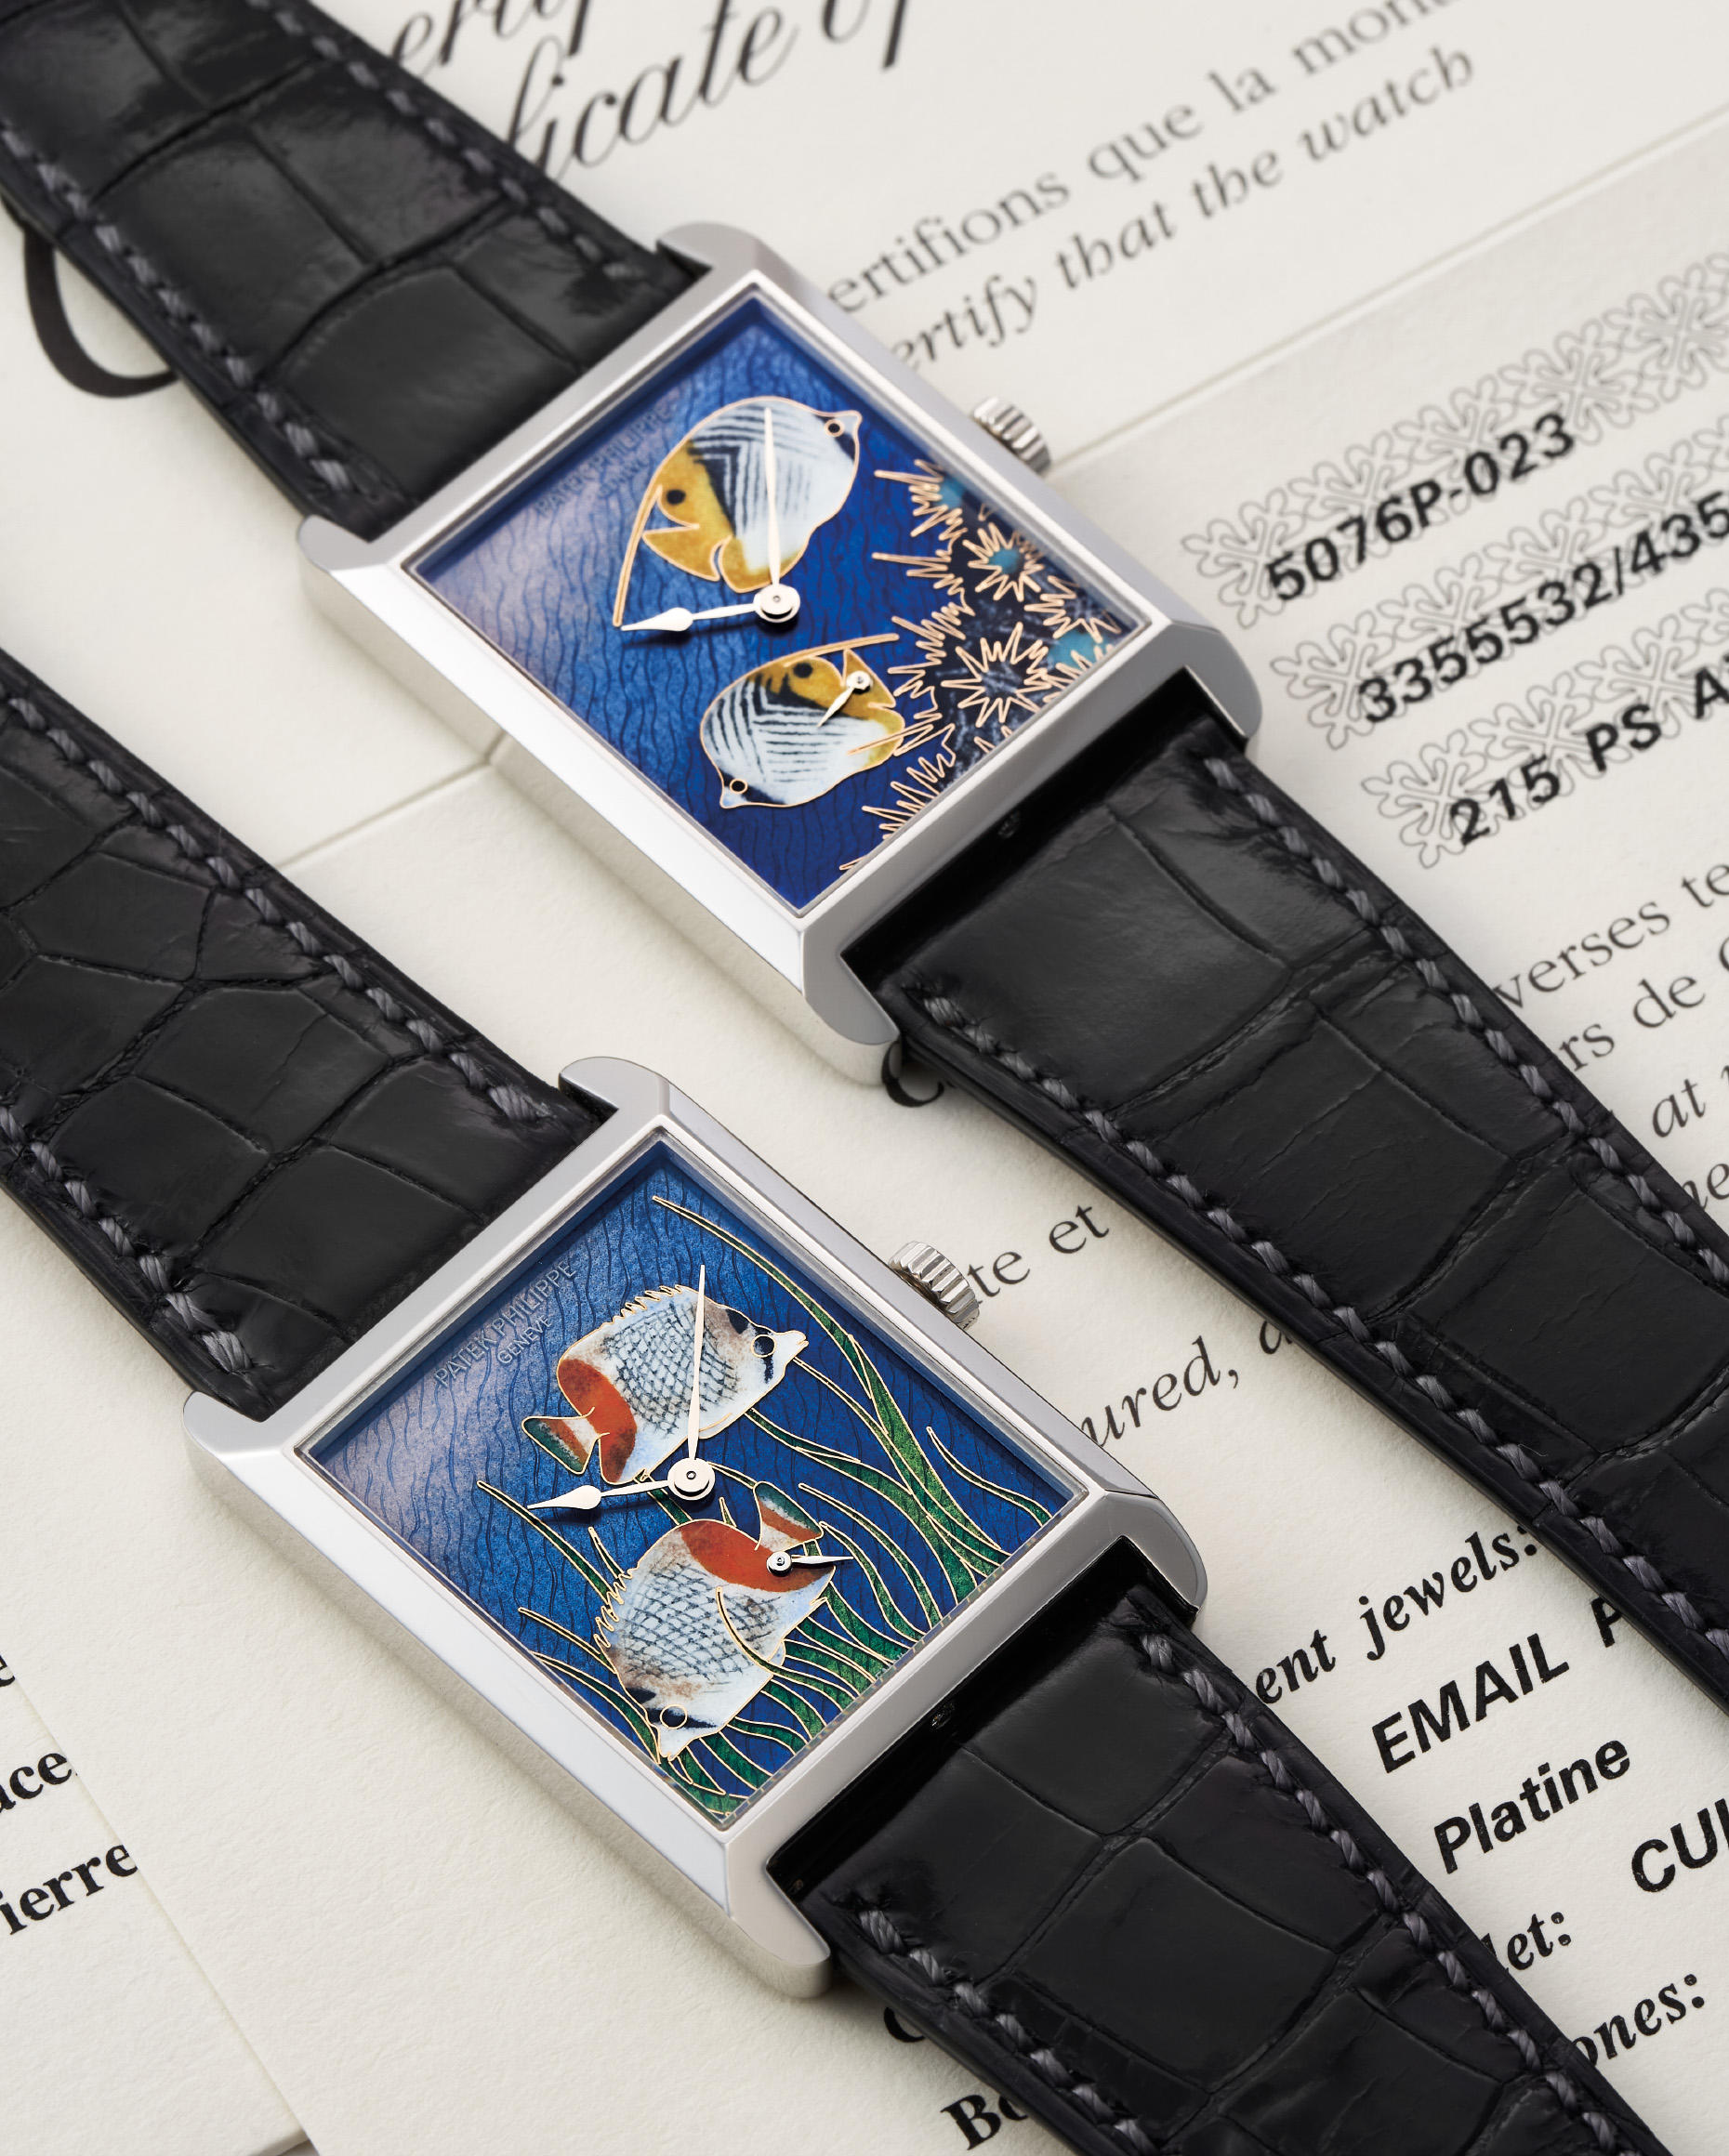 Bonhams : Louis Vuitton. A Stainless Steel 'Regatta Cup Tambour' Automatic  Wristwatch